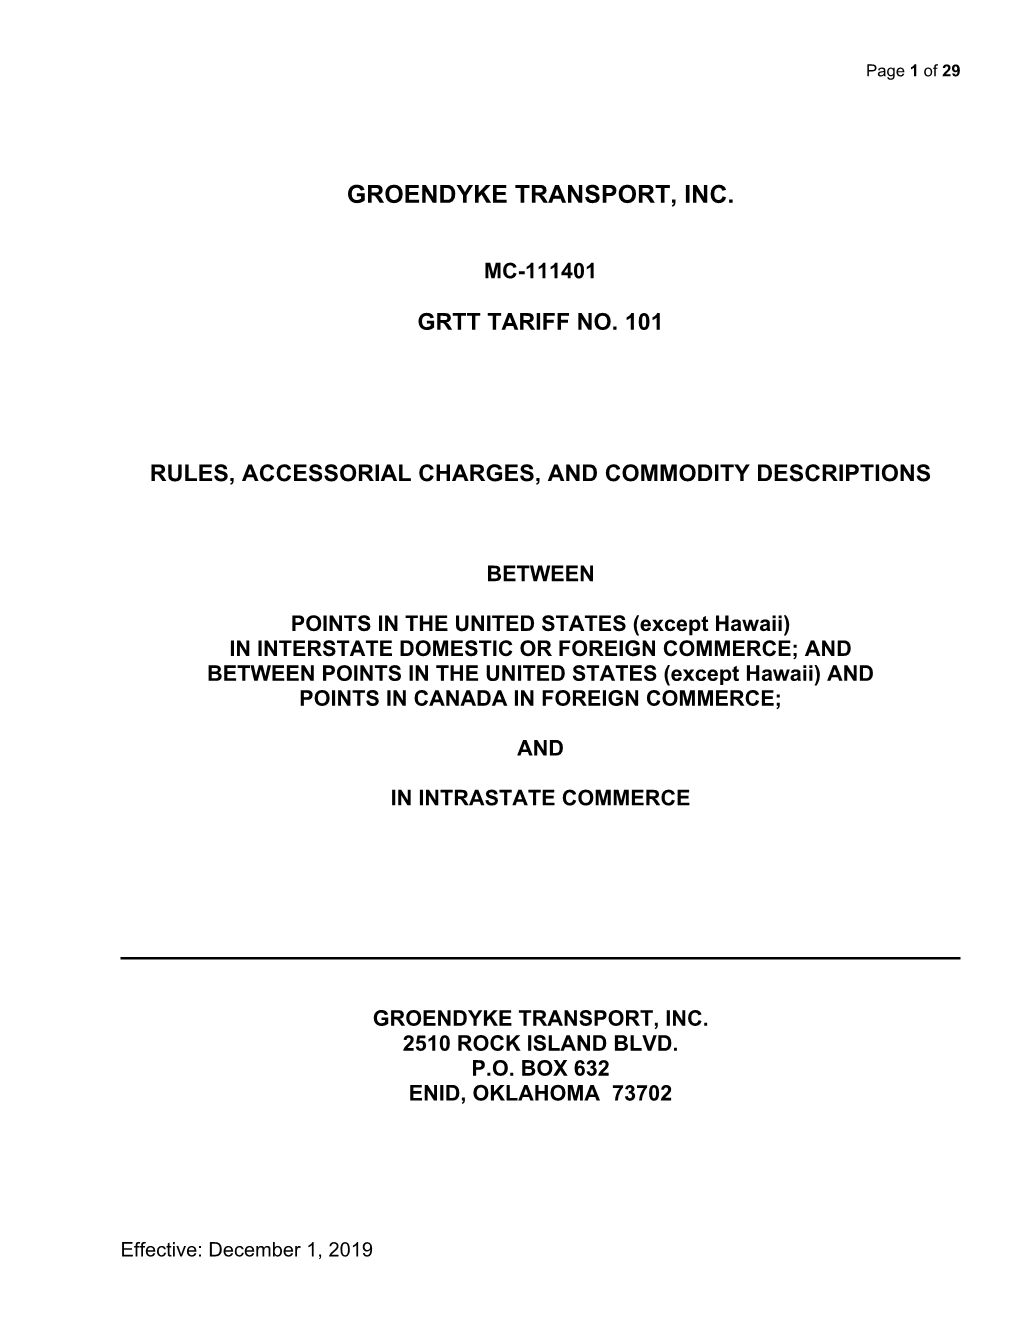 Groendyke Transport, Inc